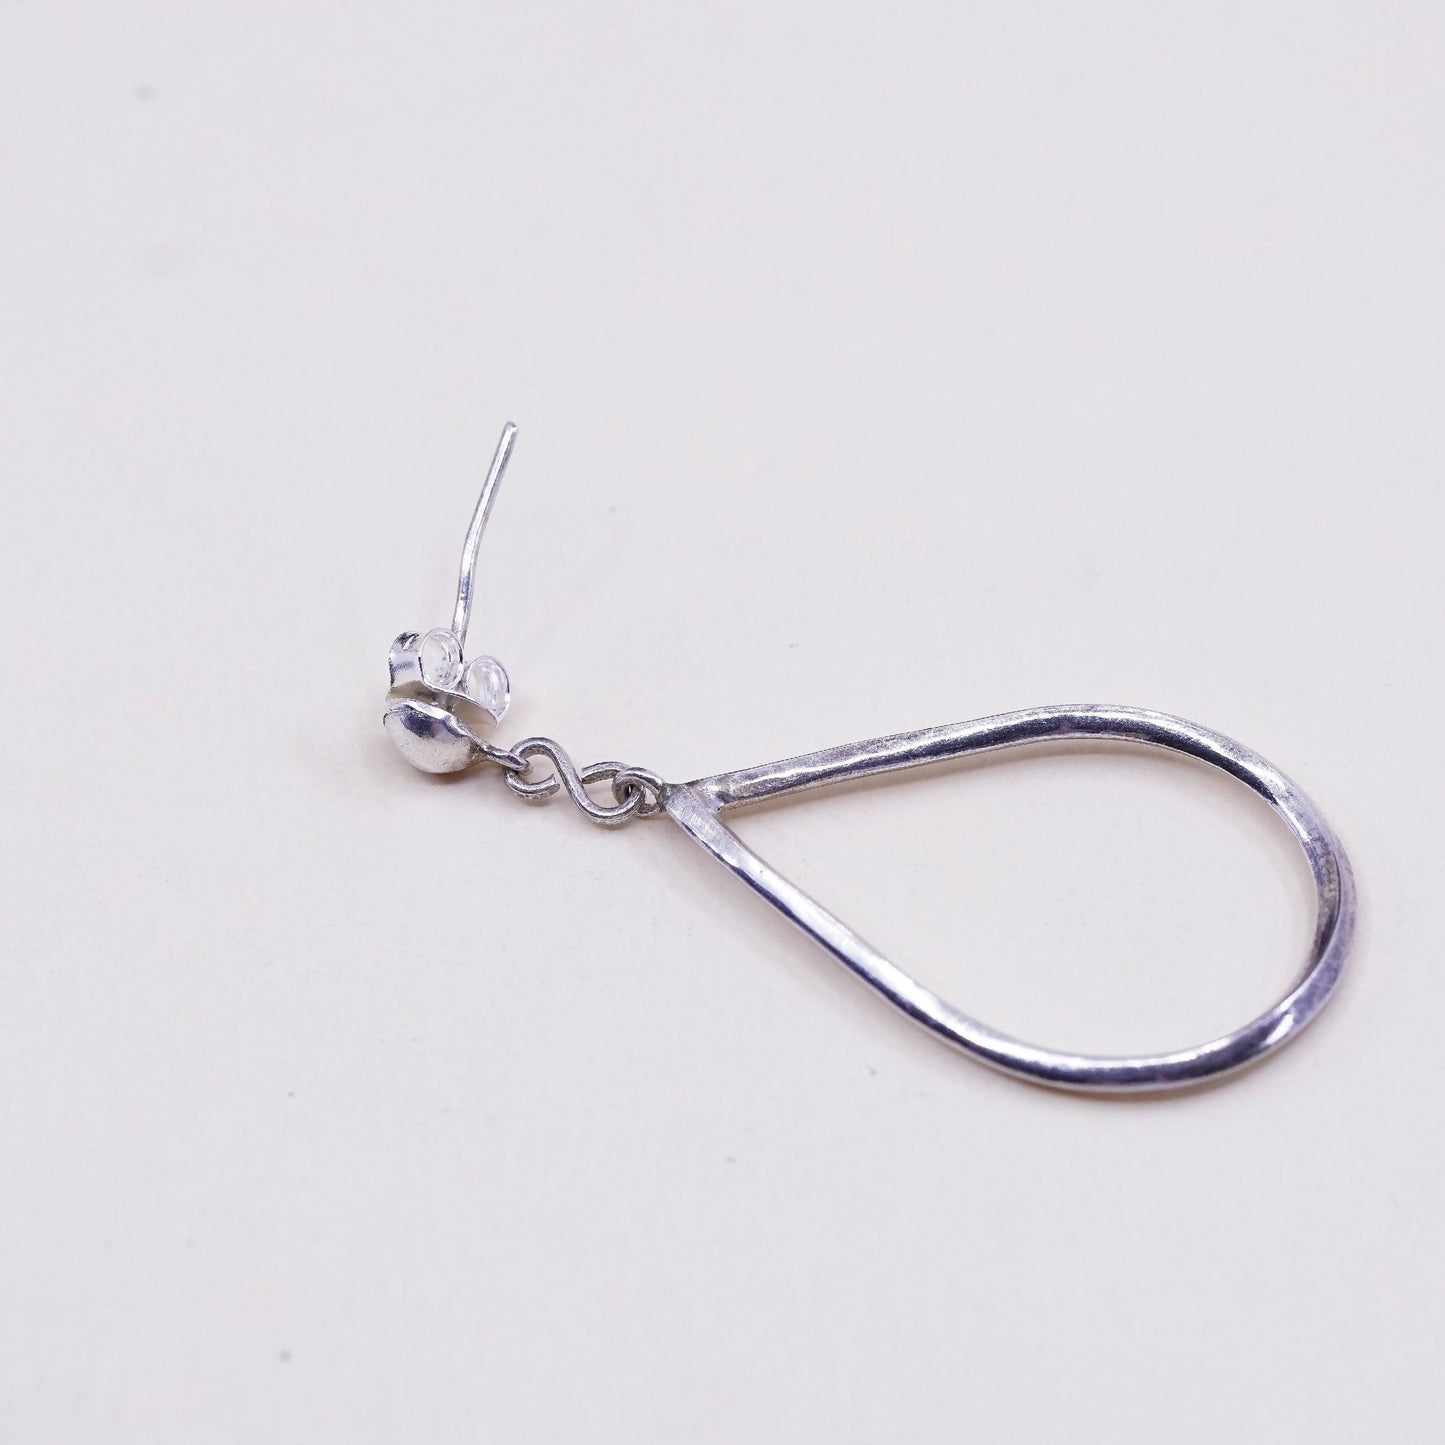 Vintage modern sterling silver handmade earrings, 925 teardrop dangles